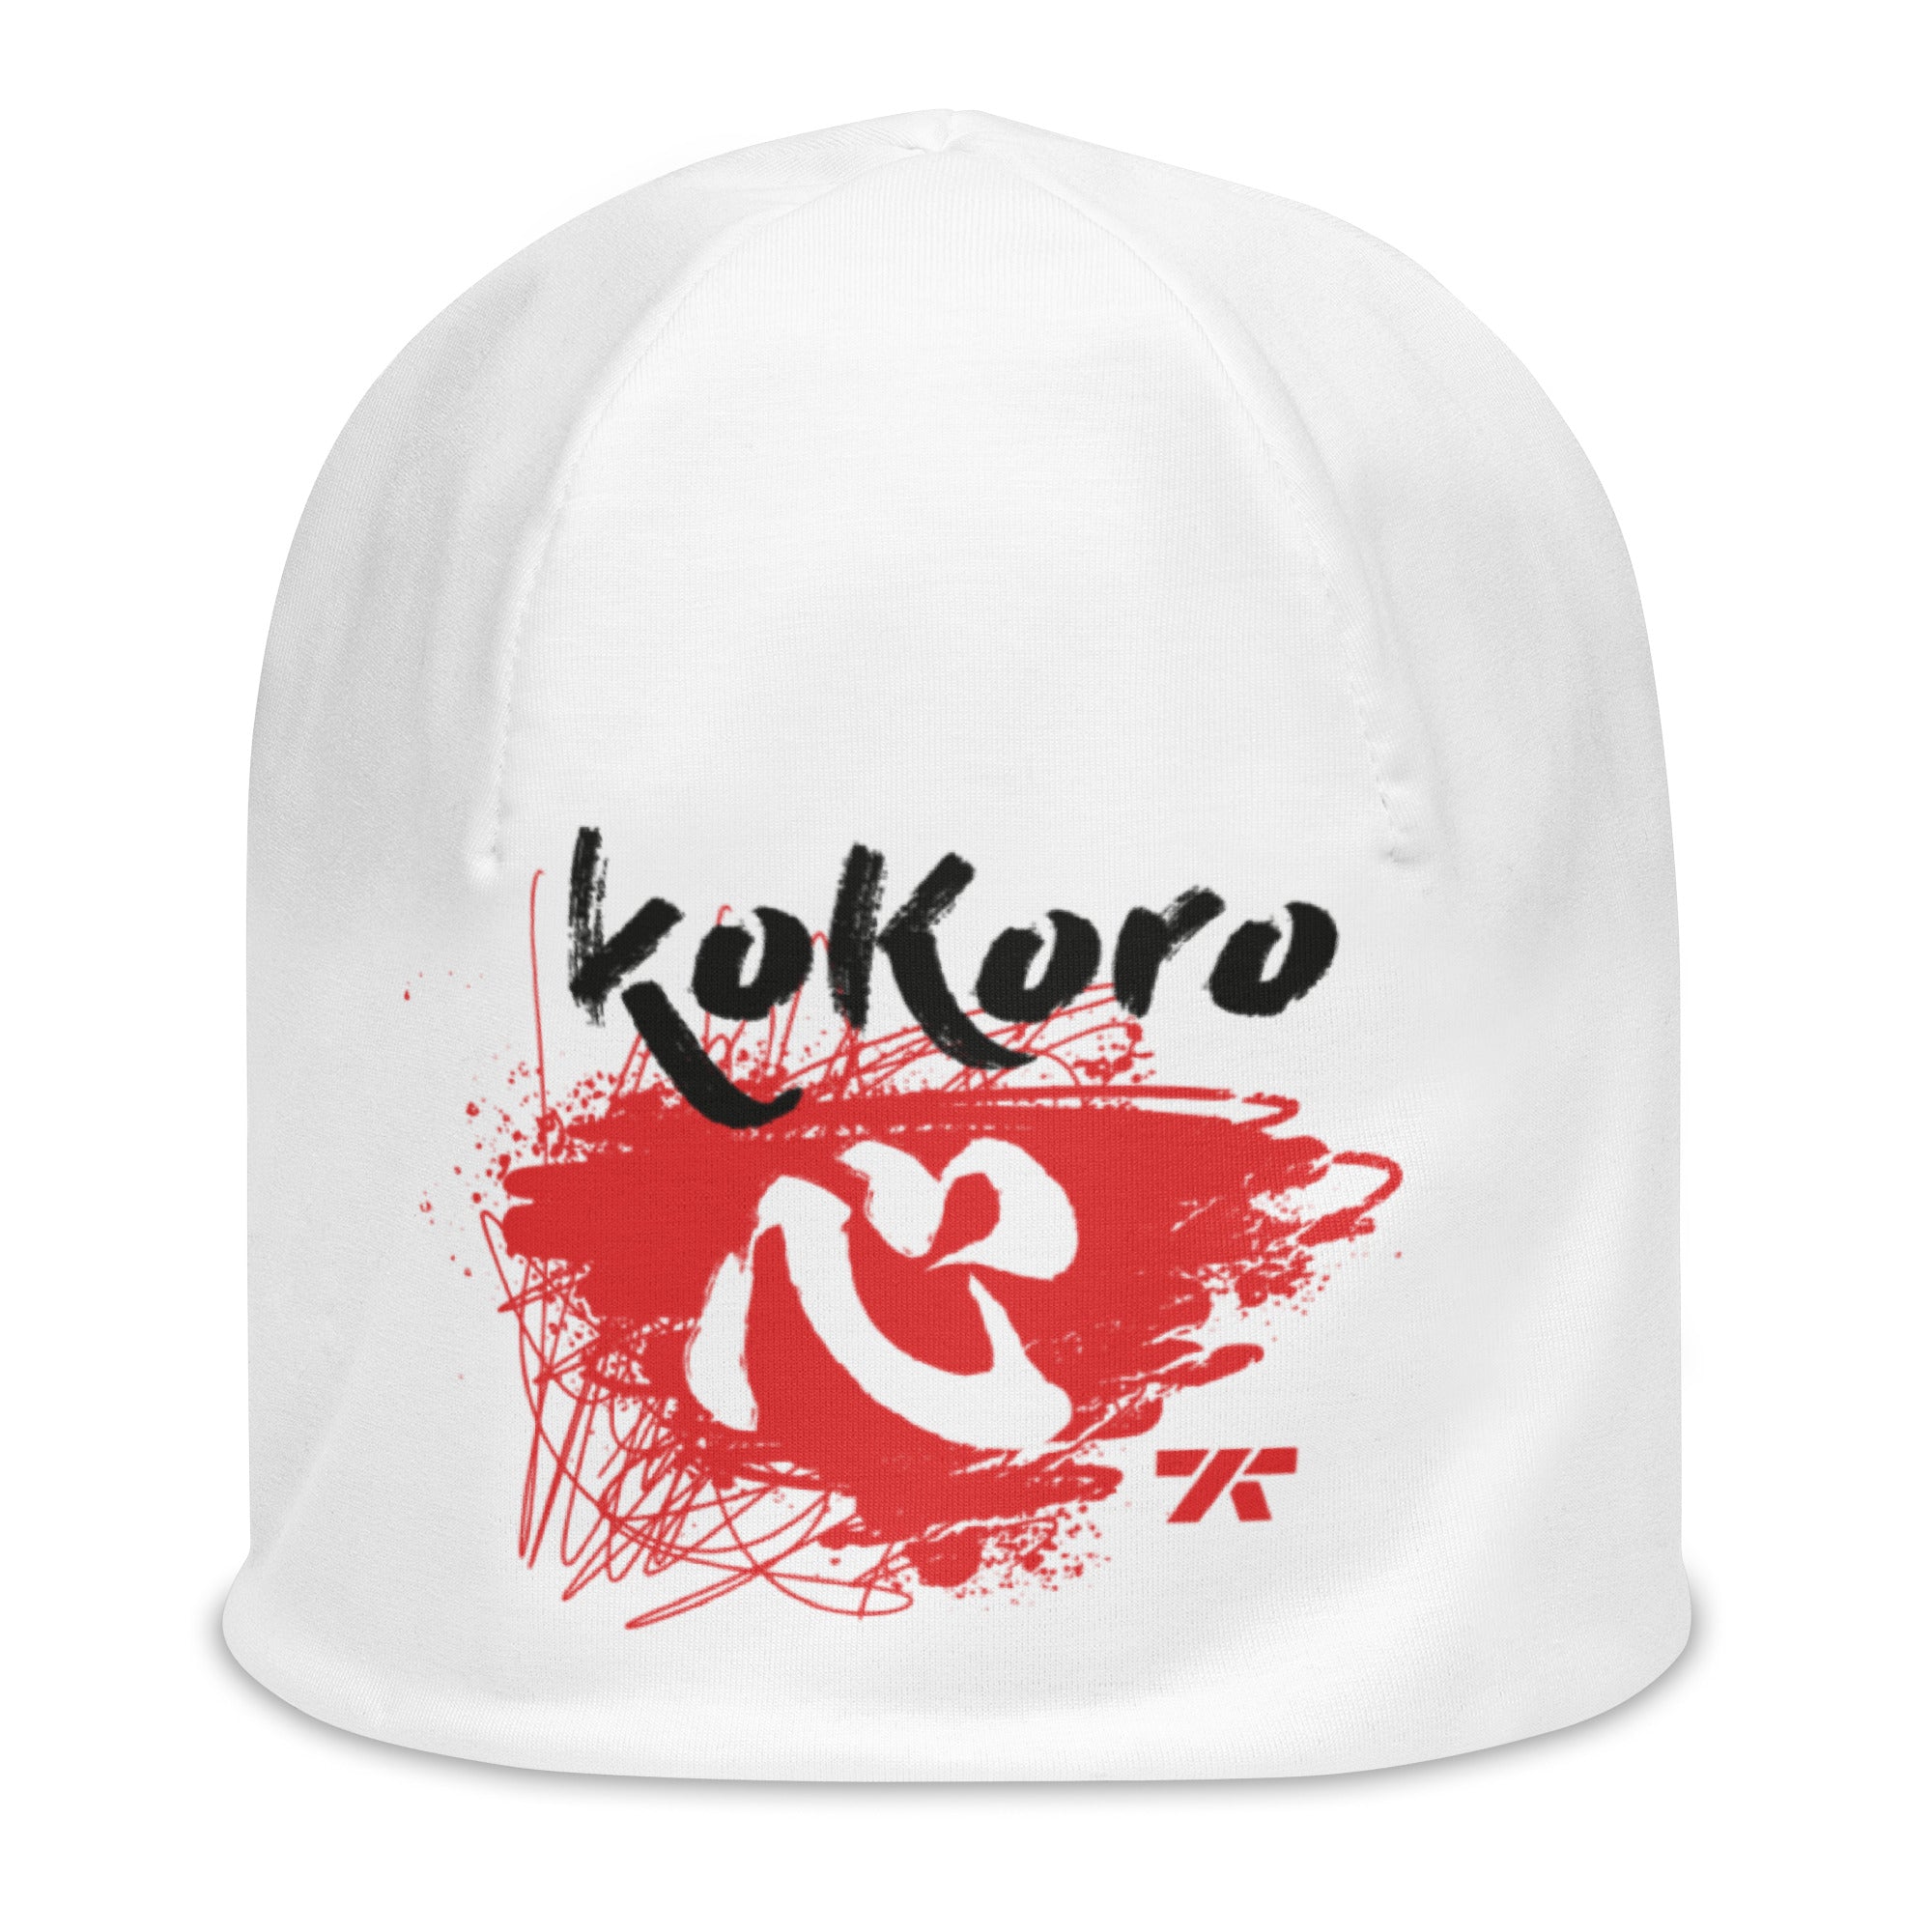 Kokoro Is Astylish Heart Logo. Kokoro Is From Japanese Language